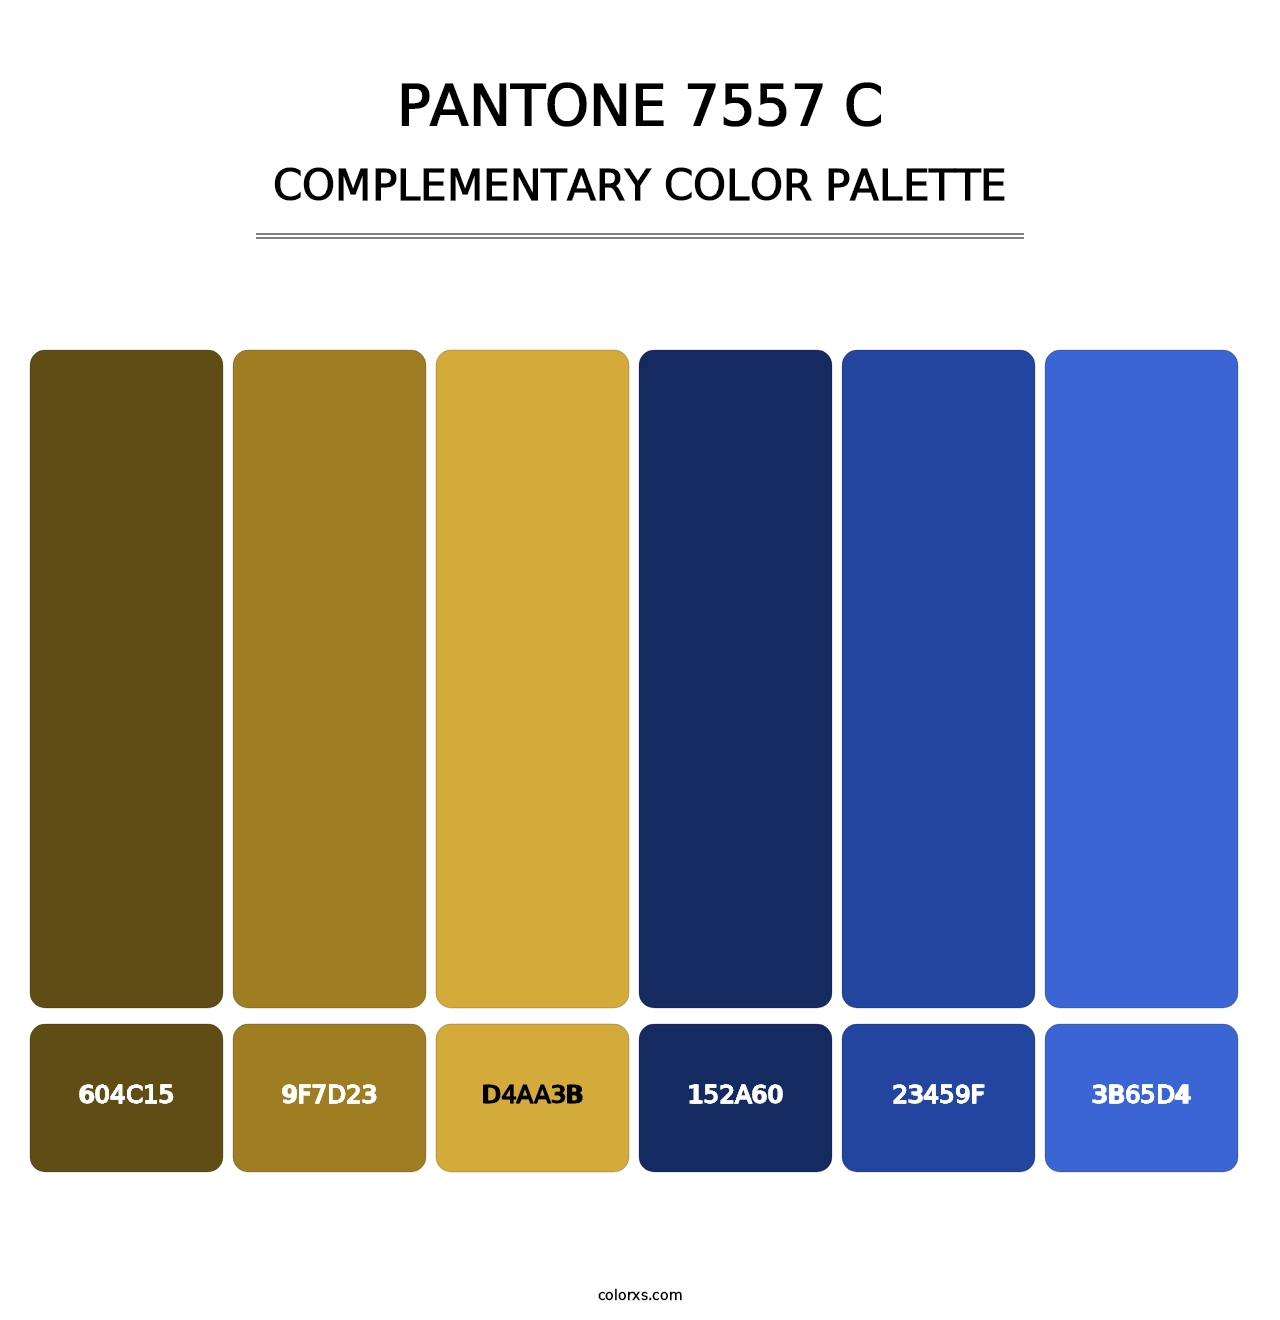 PANTONE 7557 C - Complementary Color Palette